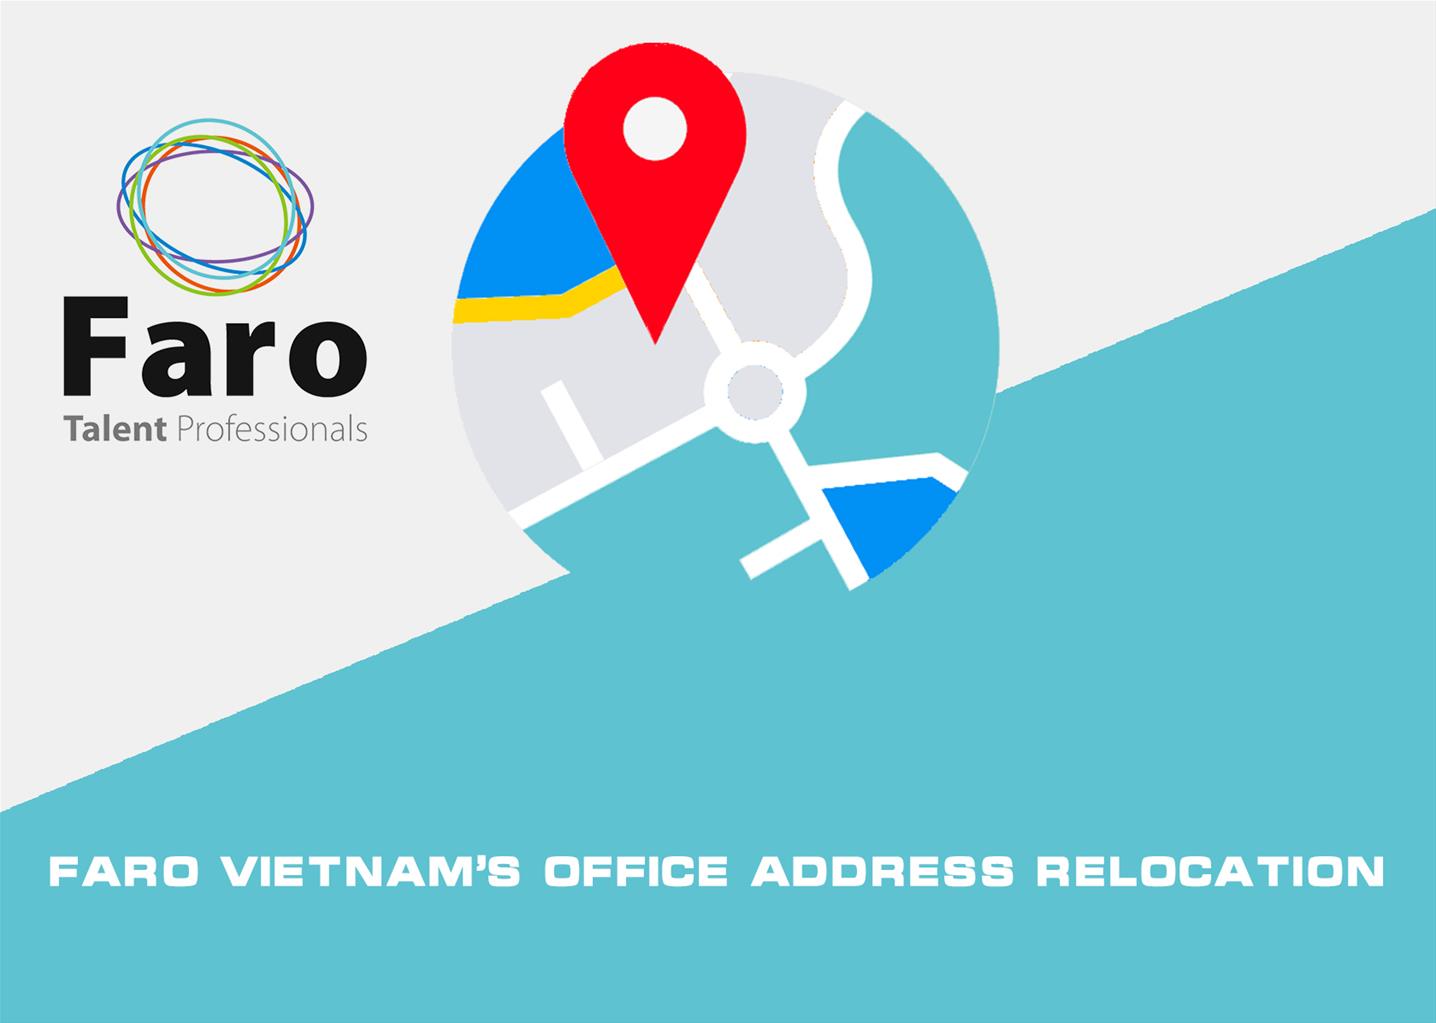 Faro Vietnam’s Ho Chi Minh City office address relocation